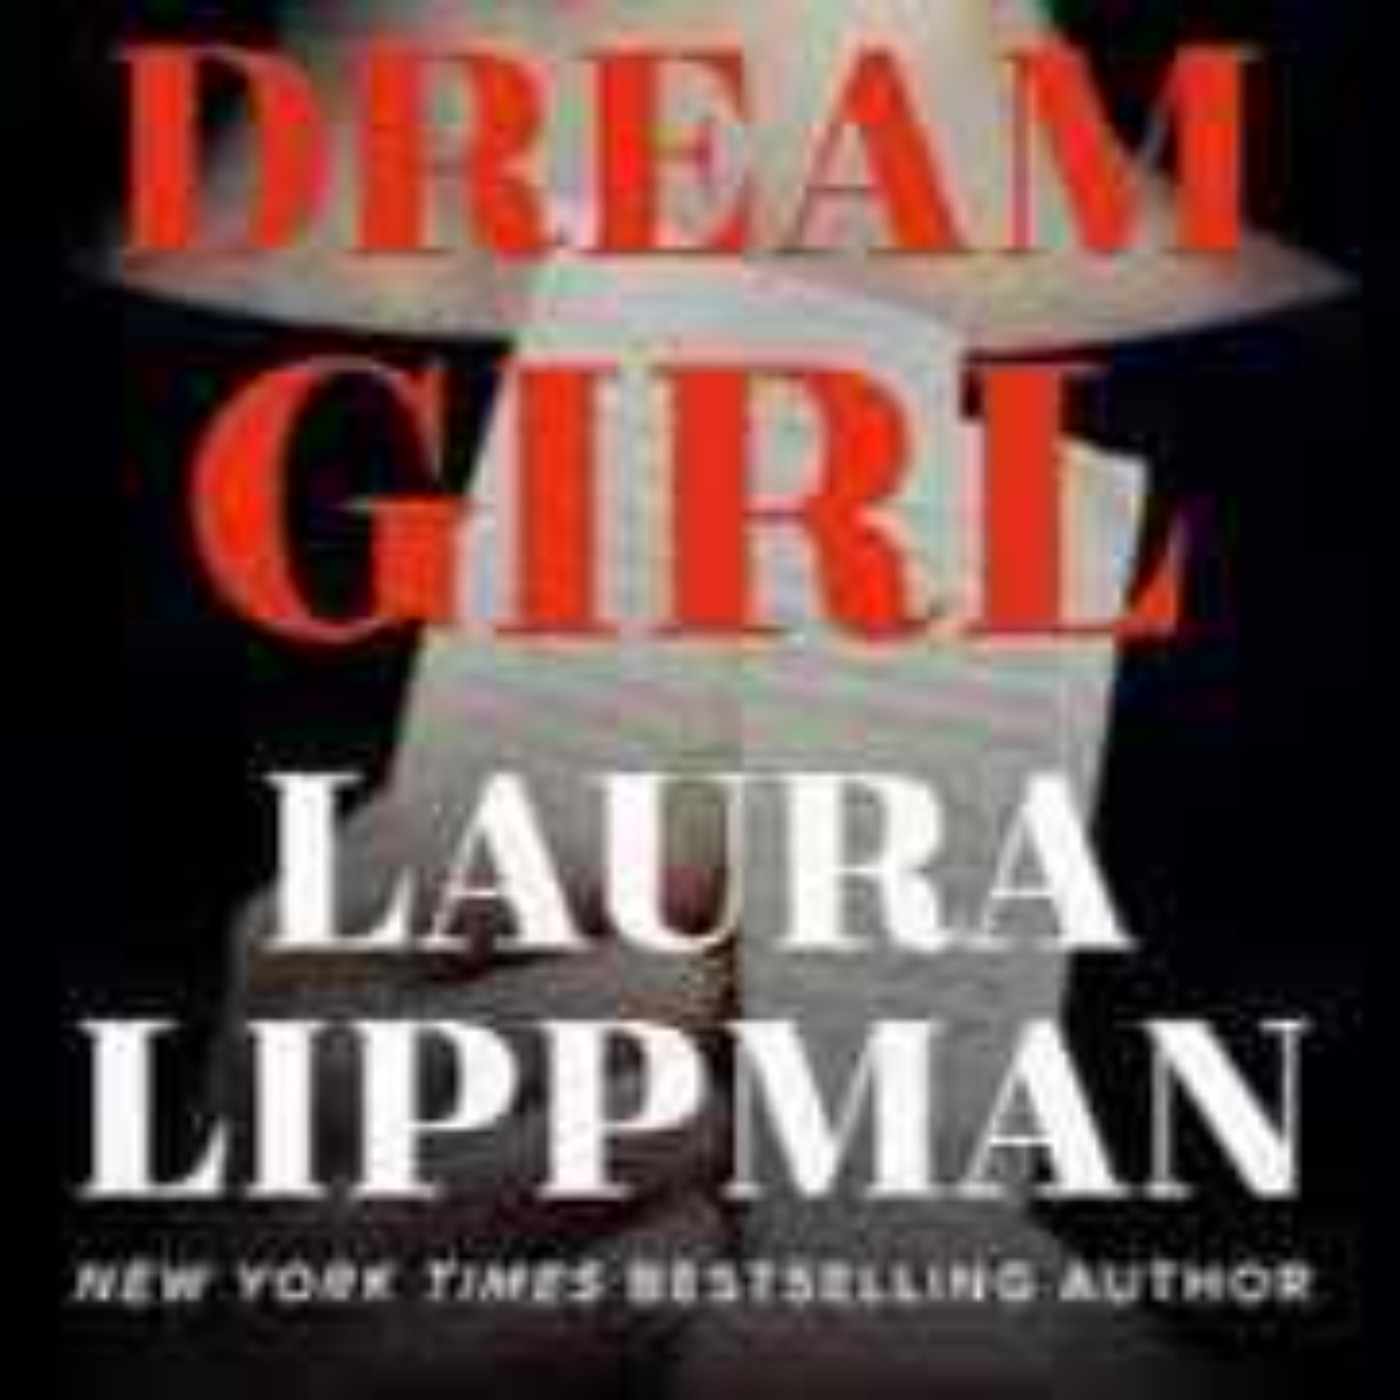 Little Atoms 708 - Laura Lippman's Dream Girl